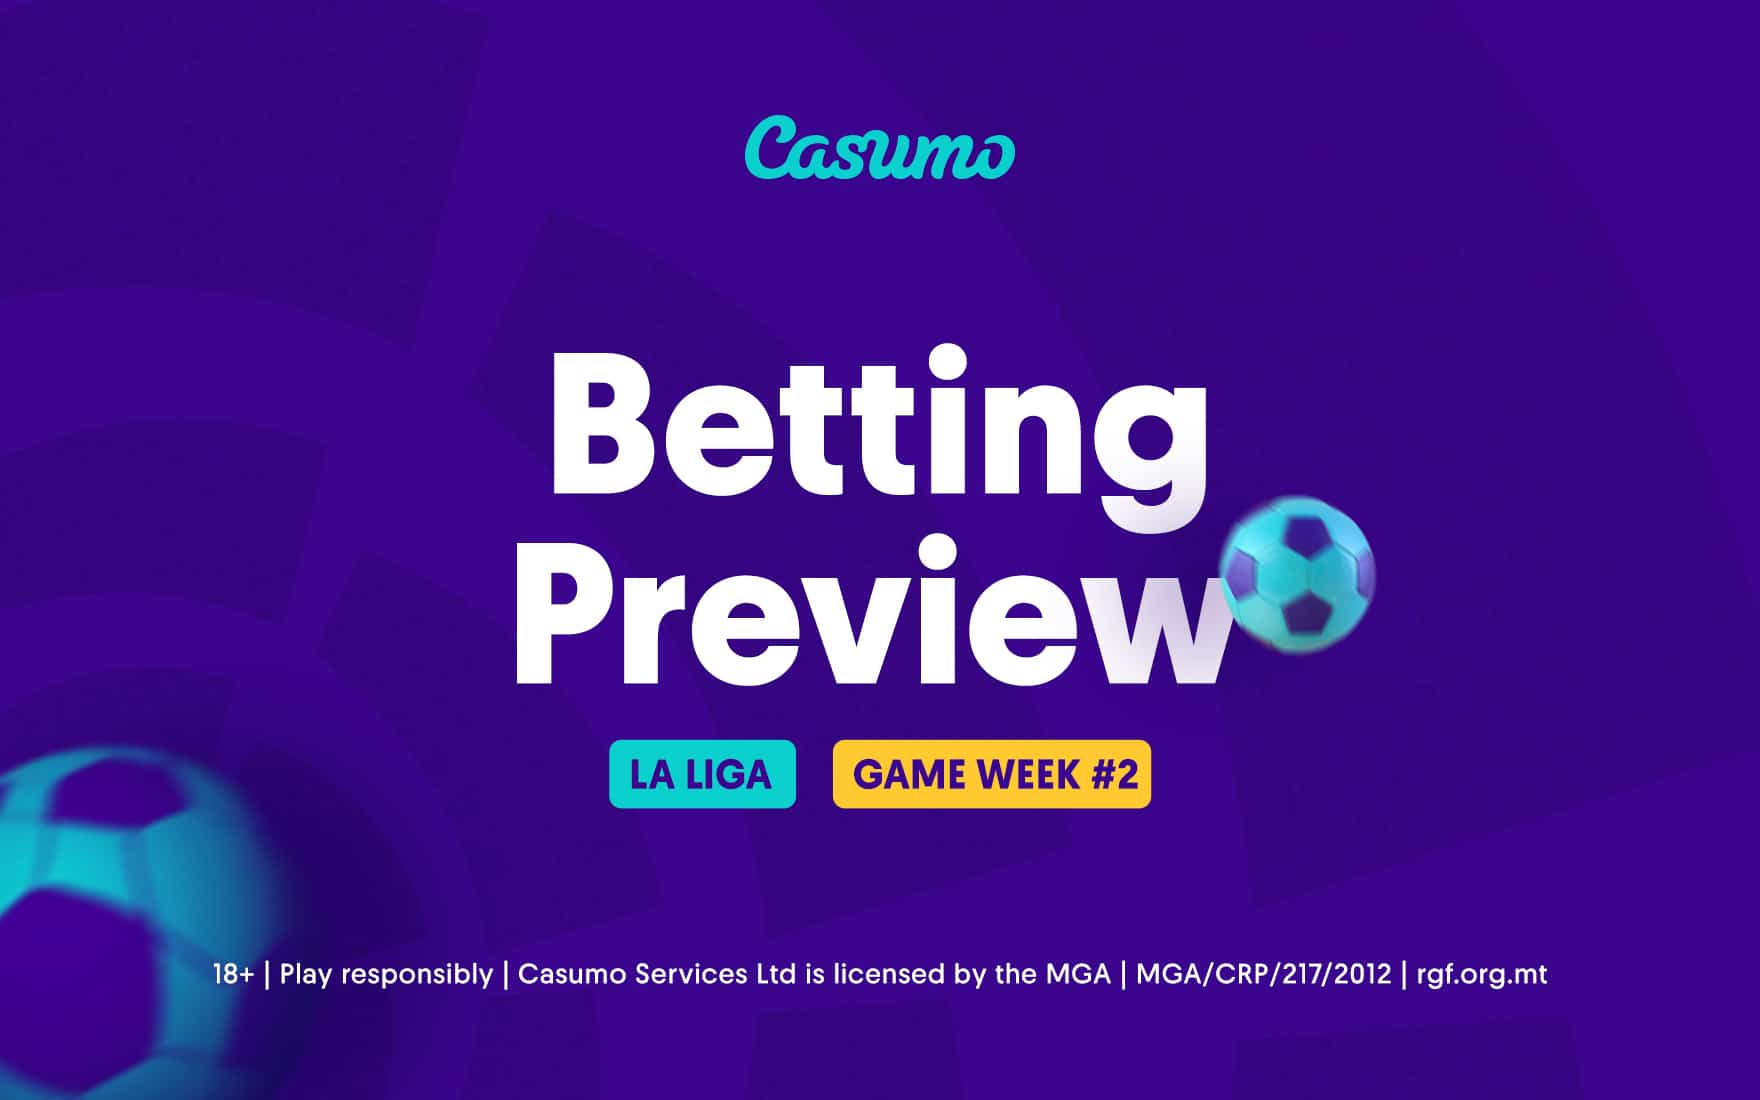 La Liga game week 2 Betting Preview Casumo